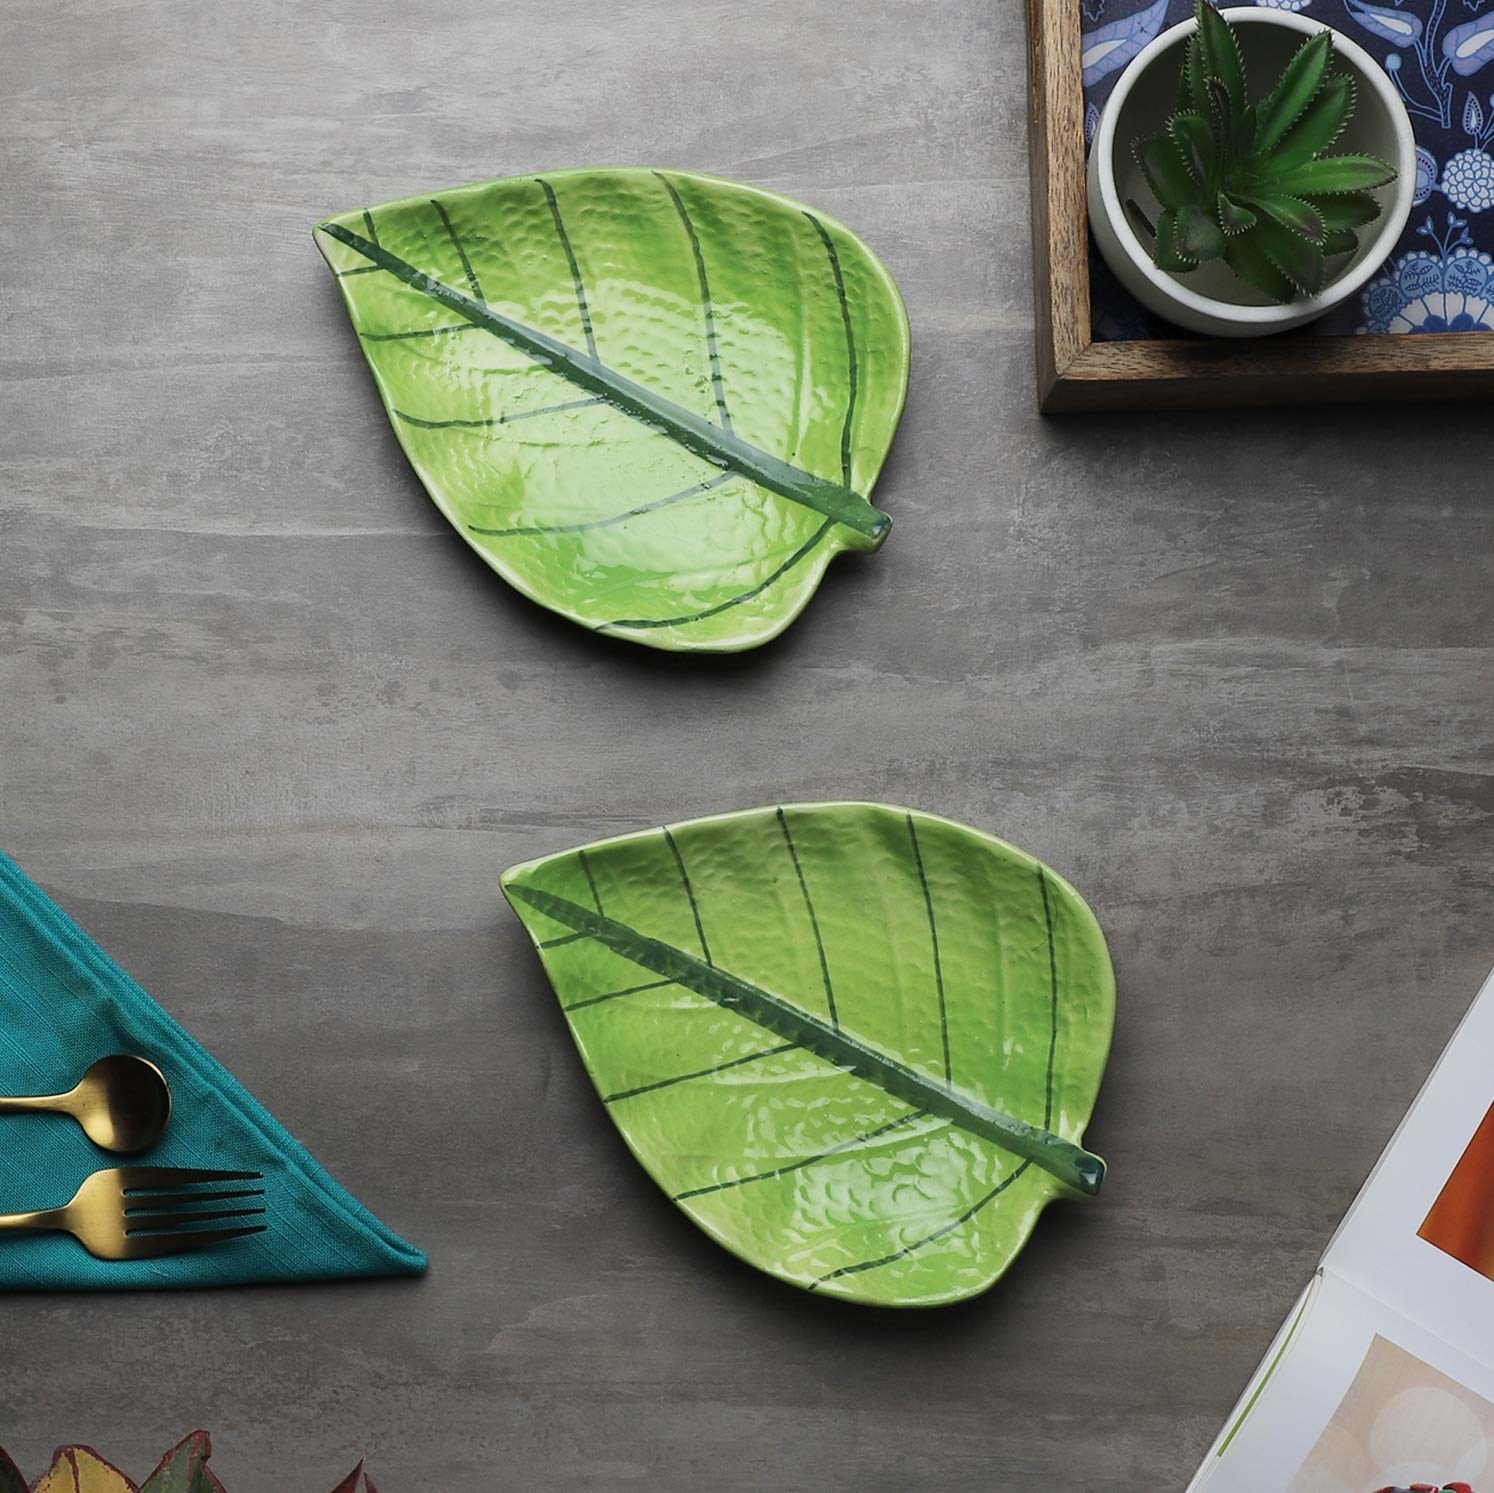 Leaf-shaped plates on a table